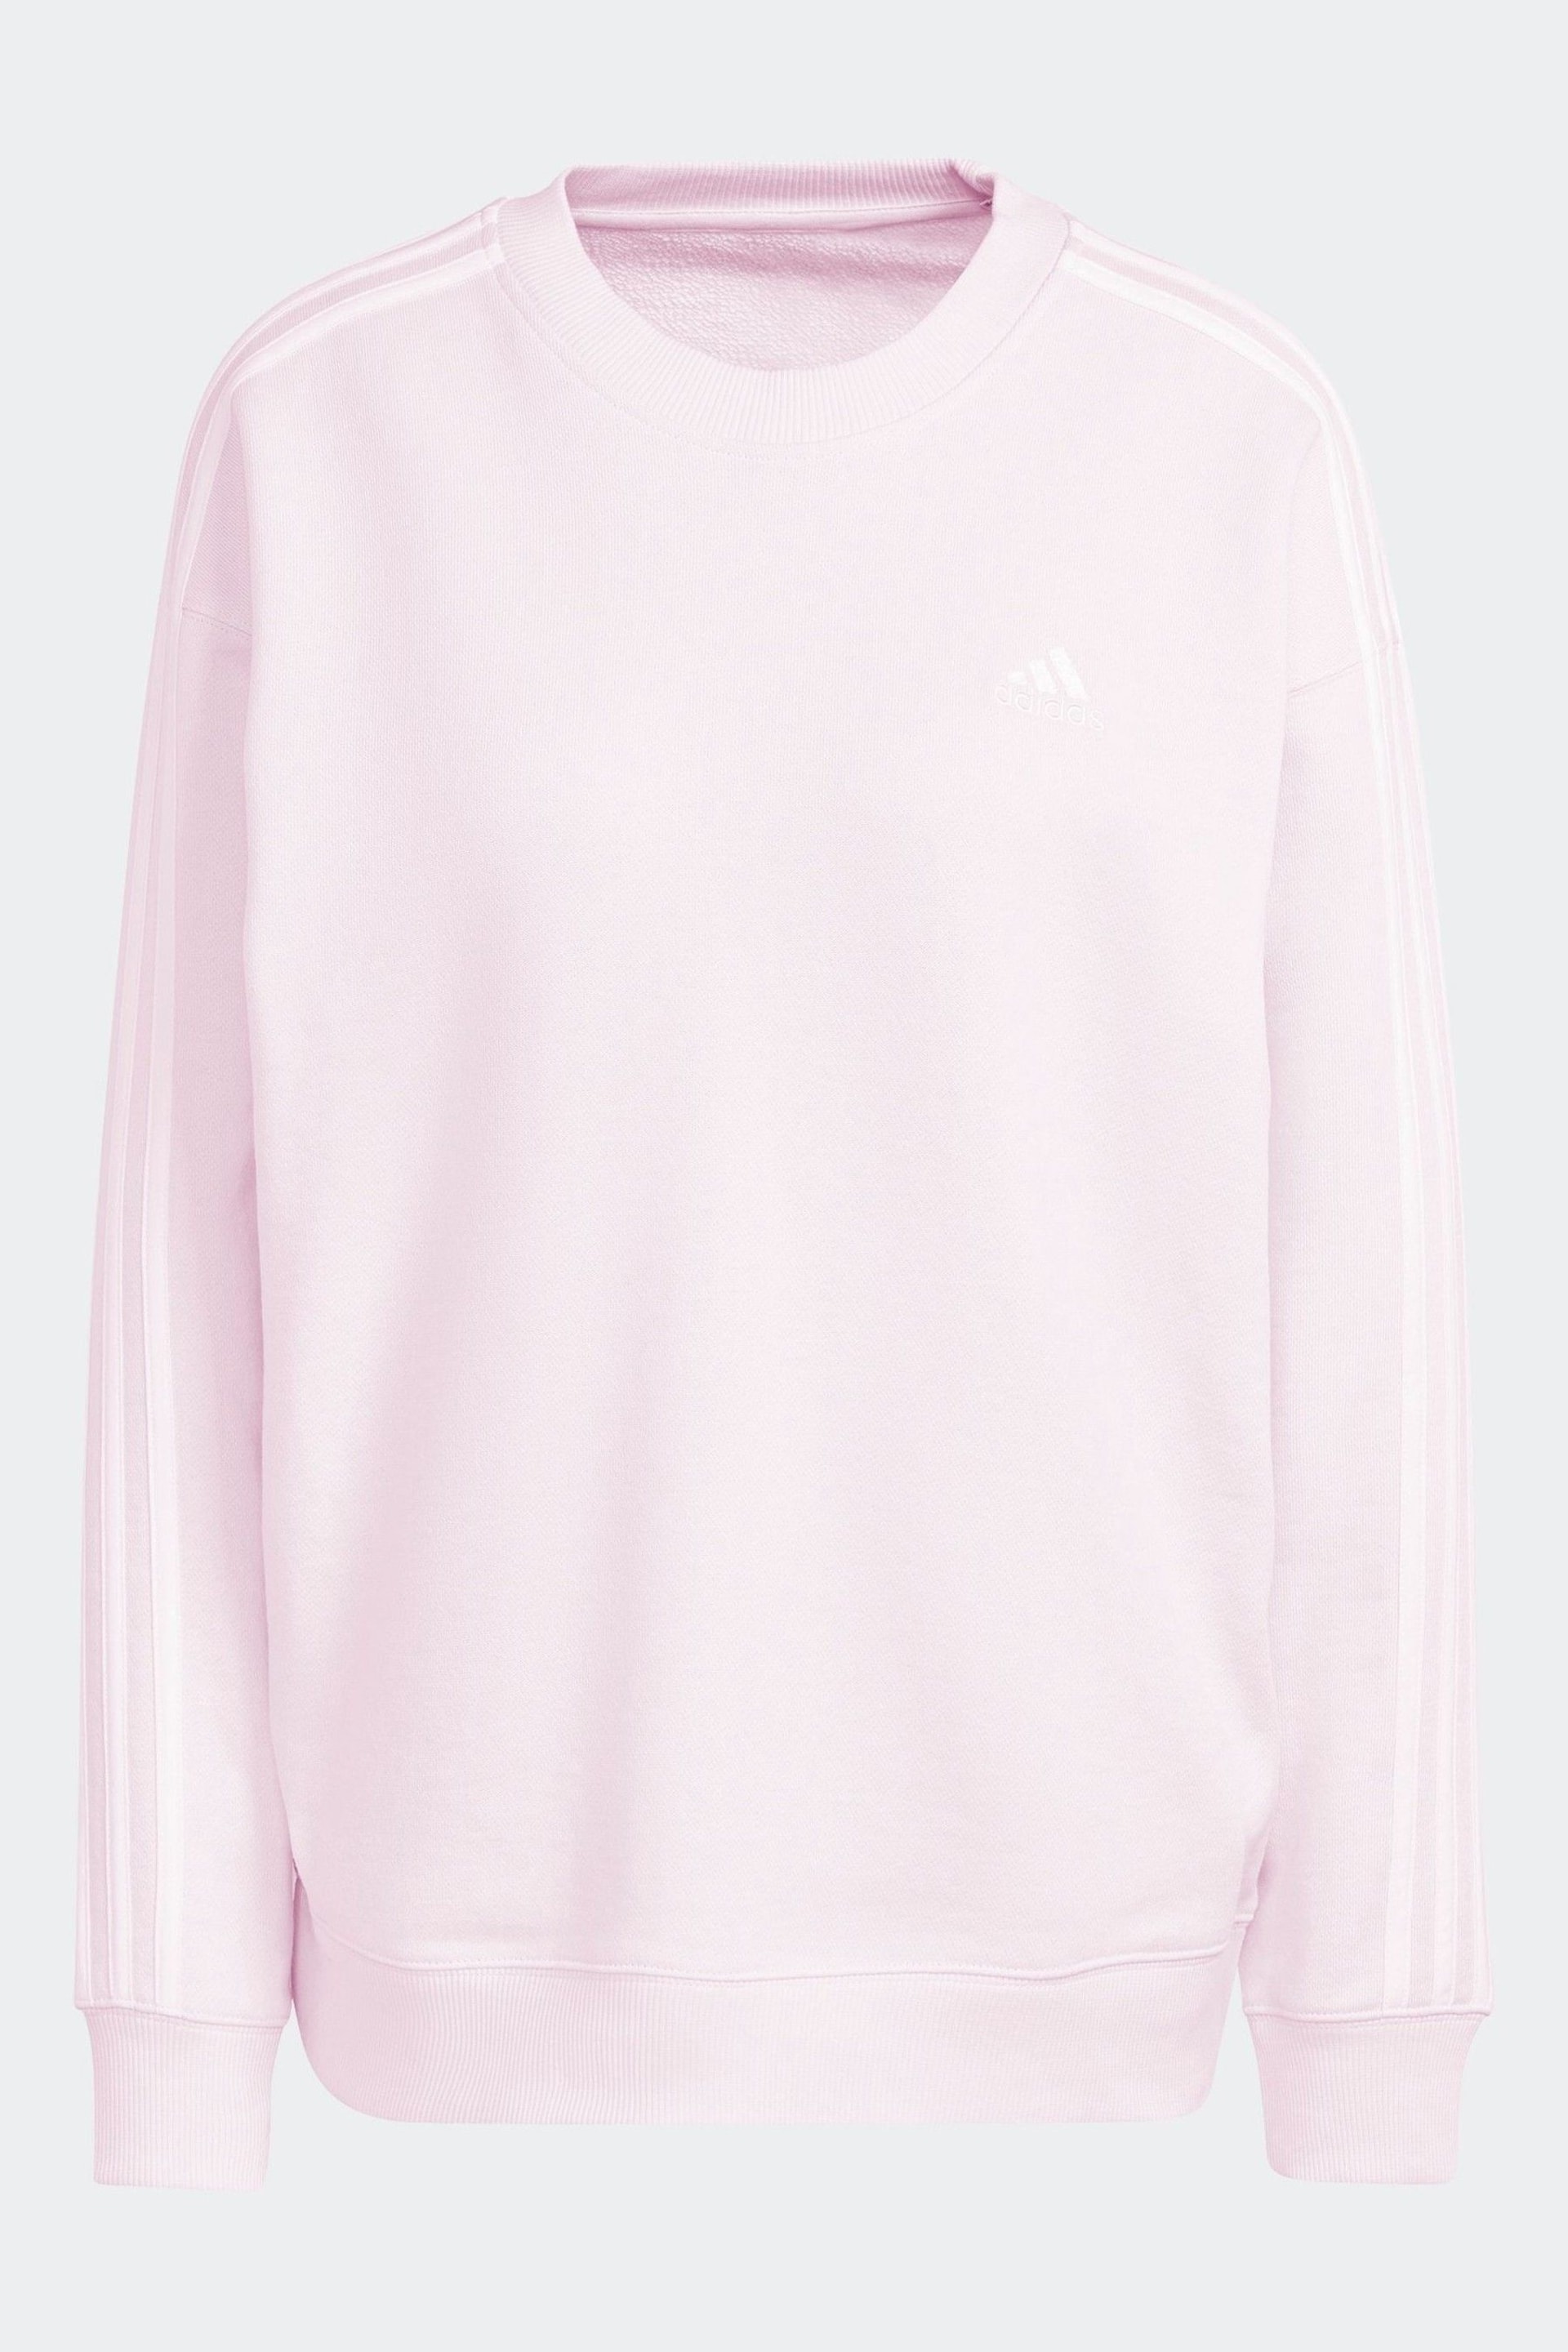 adidas Pink Sportswear Essentials 3-Stripes Sweatshirt - Image 5 of 5